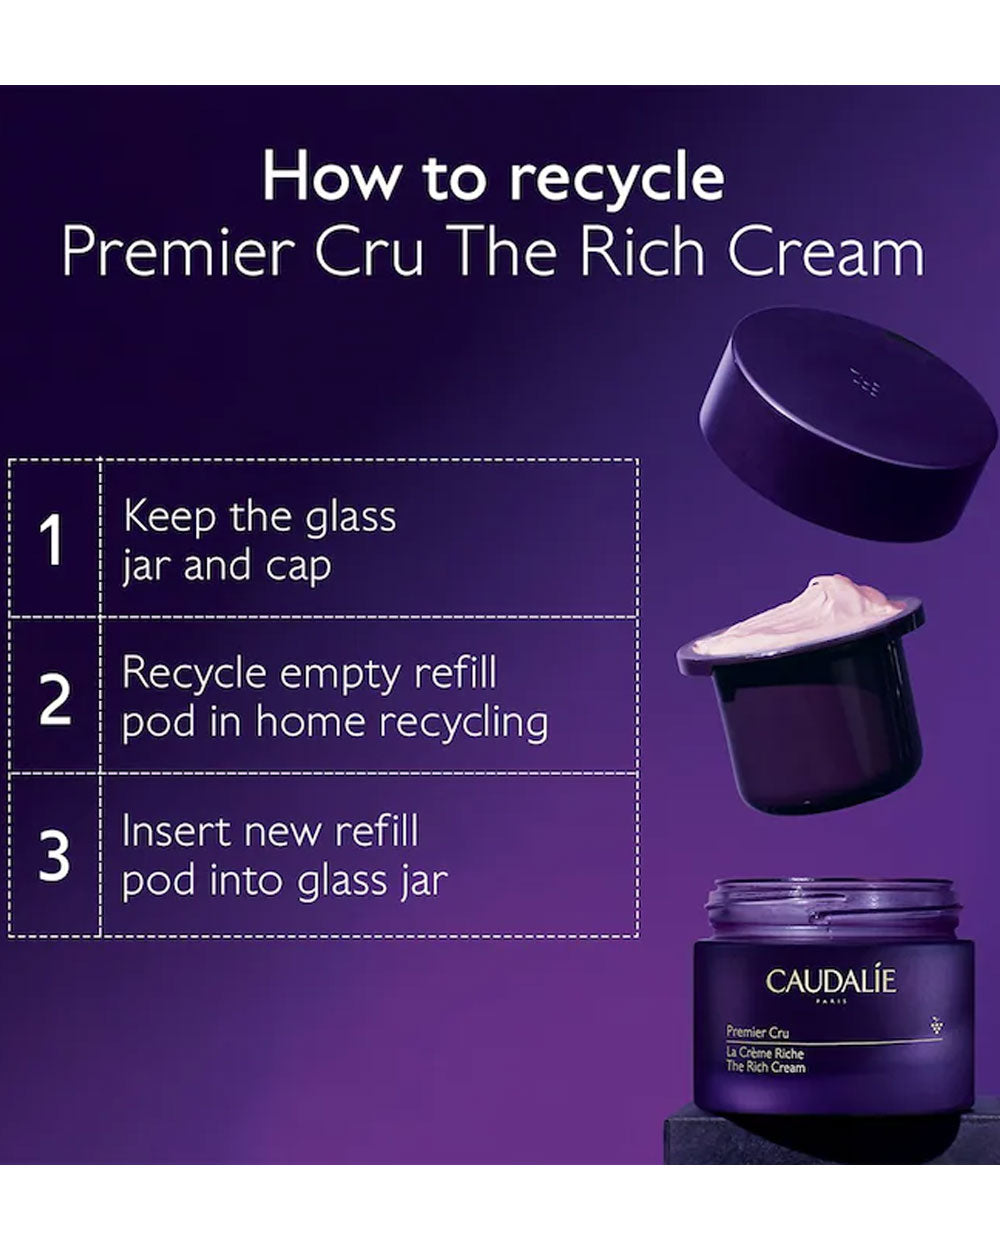 Premier Cru The Rich Cream Refill